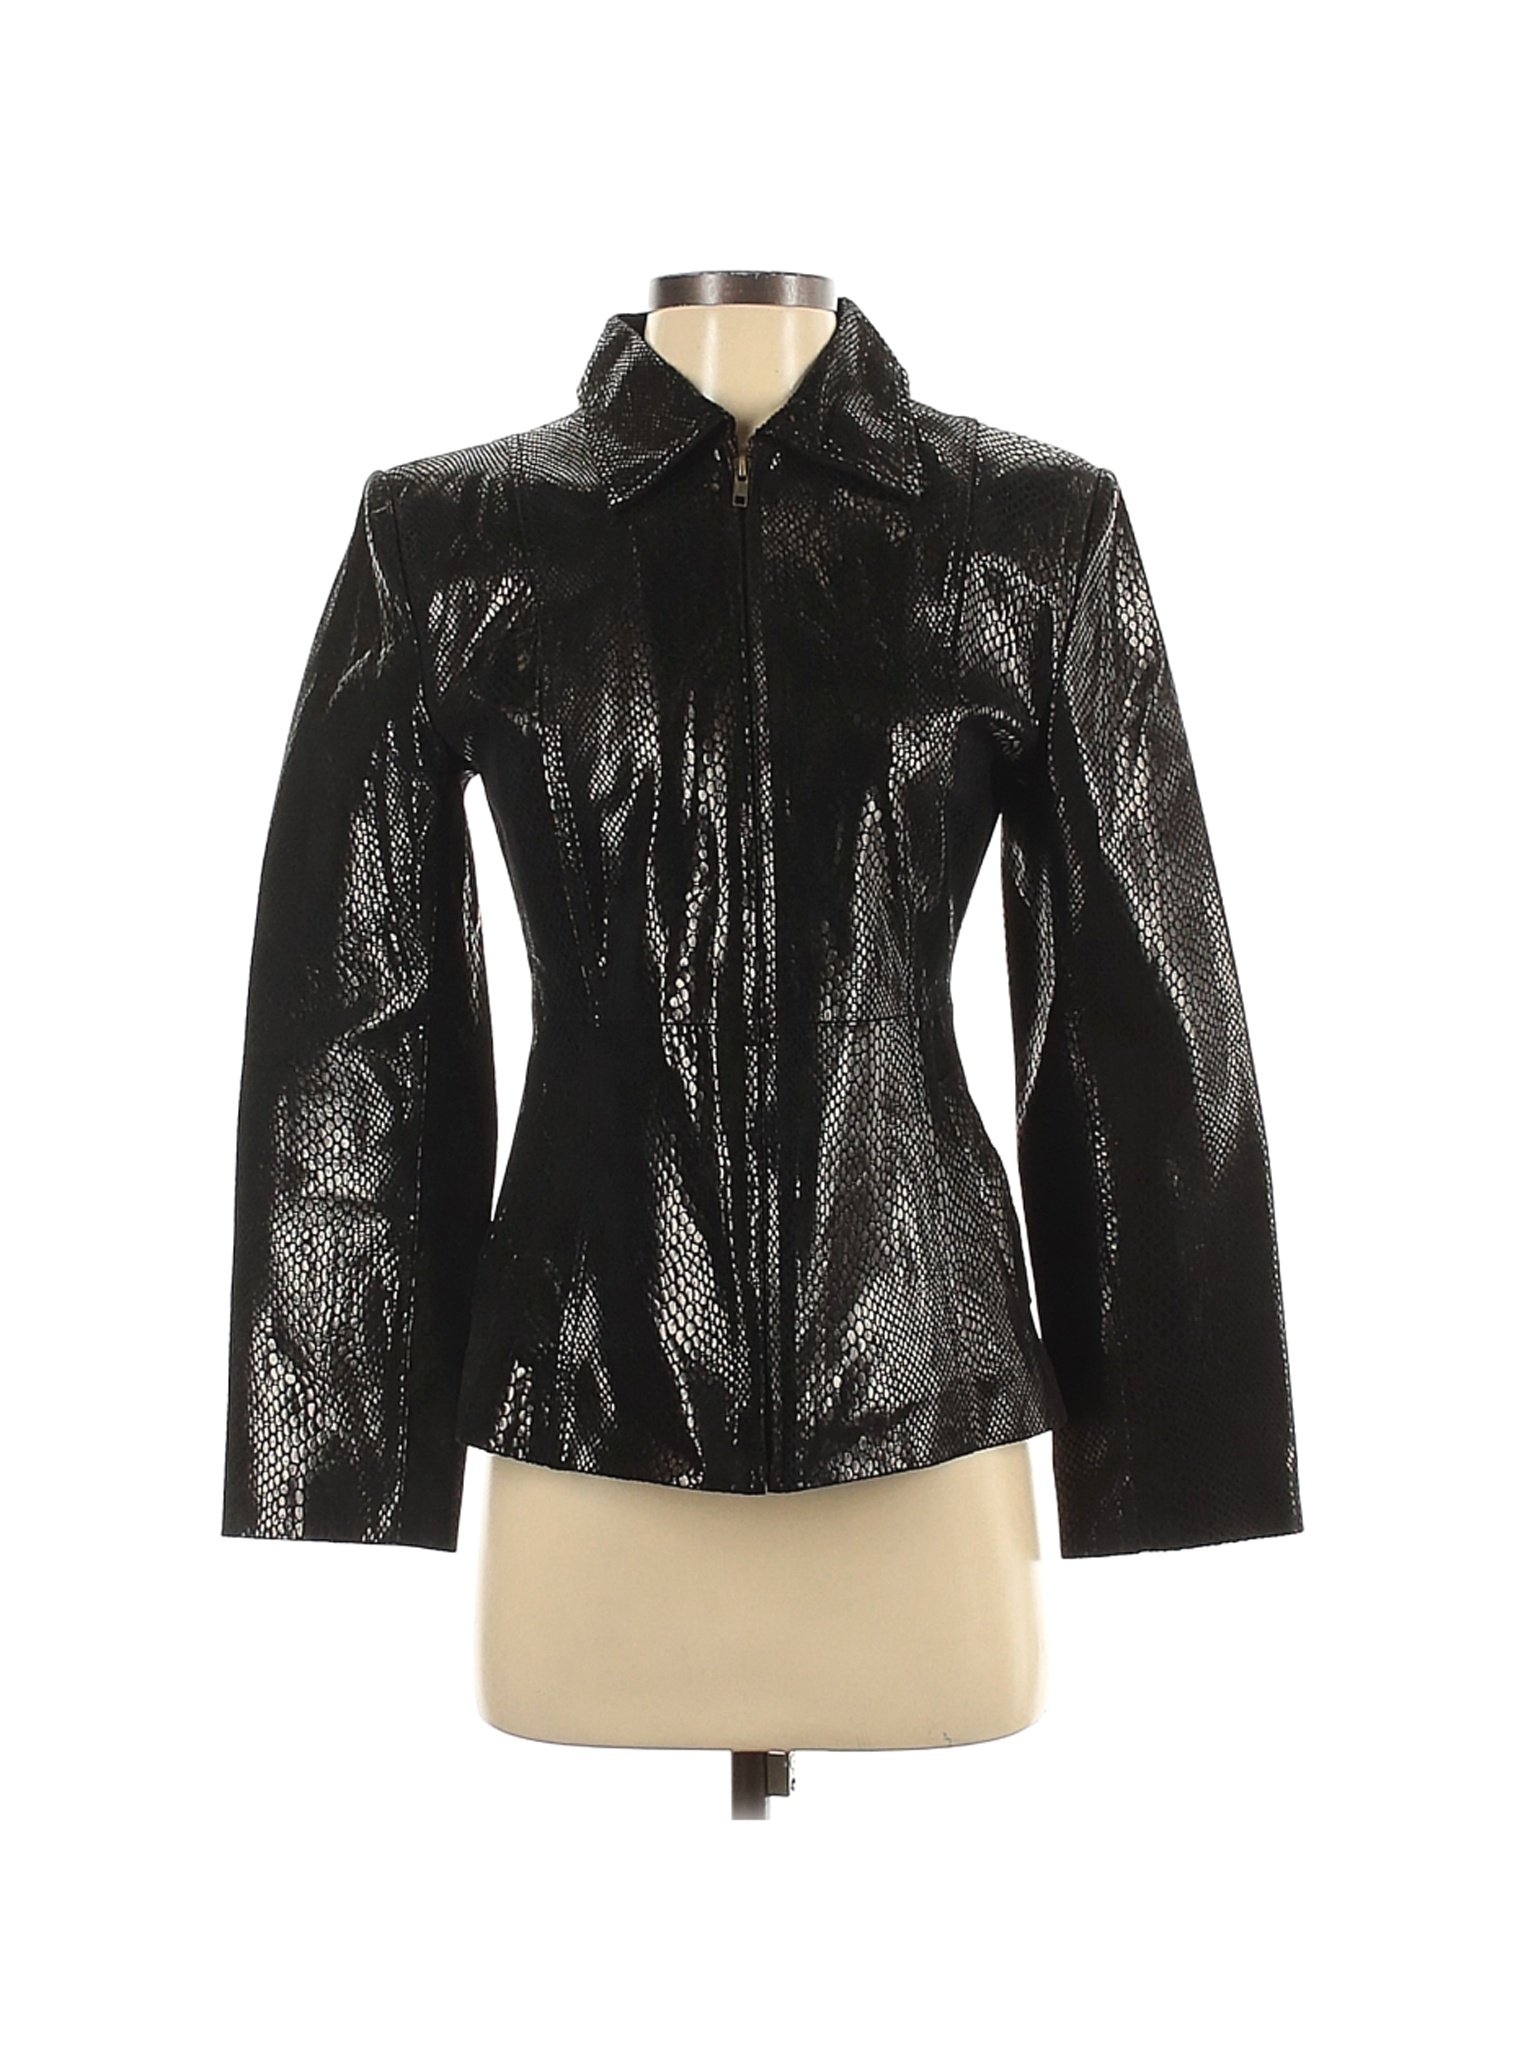 Raffaelo Leather Women Black Leather Jacket XS | eBay